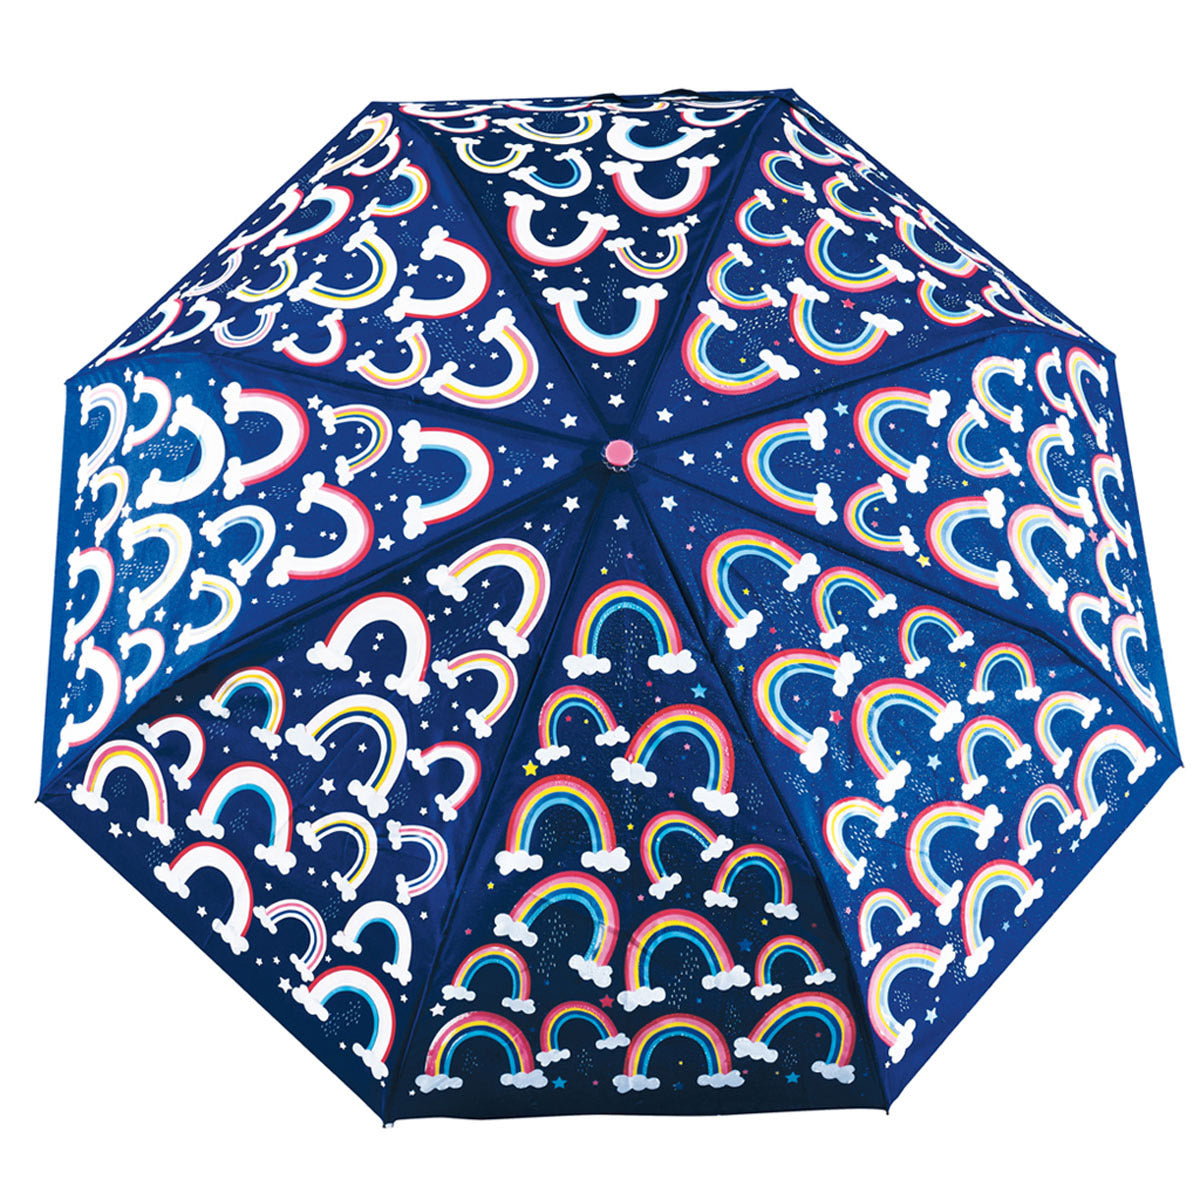 Colour Changing Umbrella Large